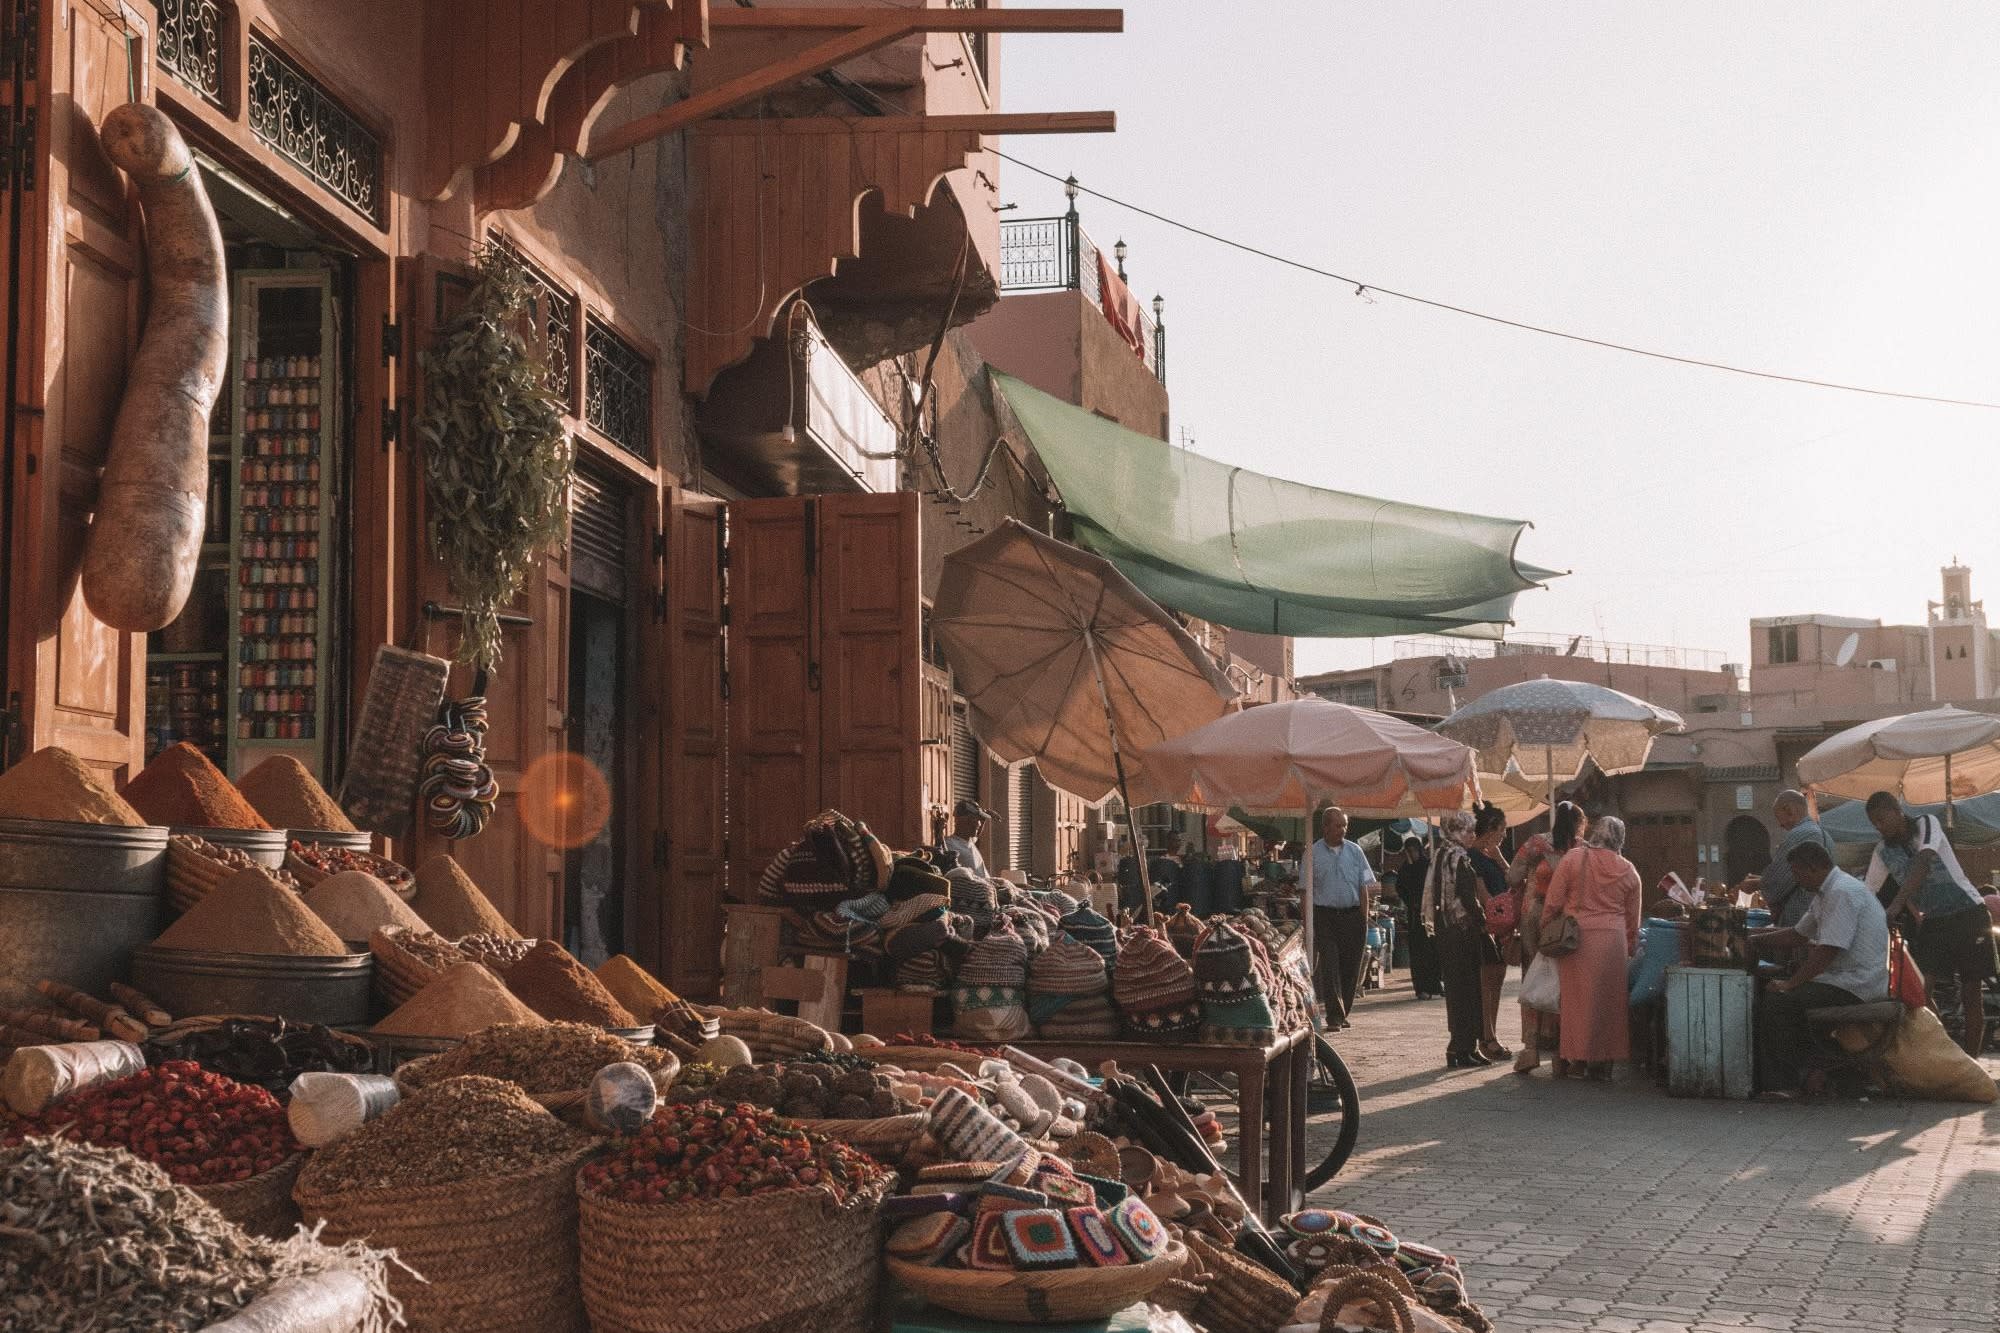 Morocco Bazaar